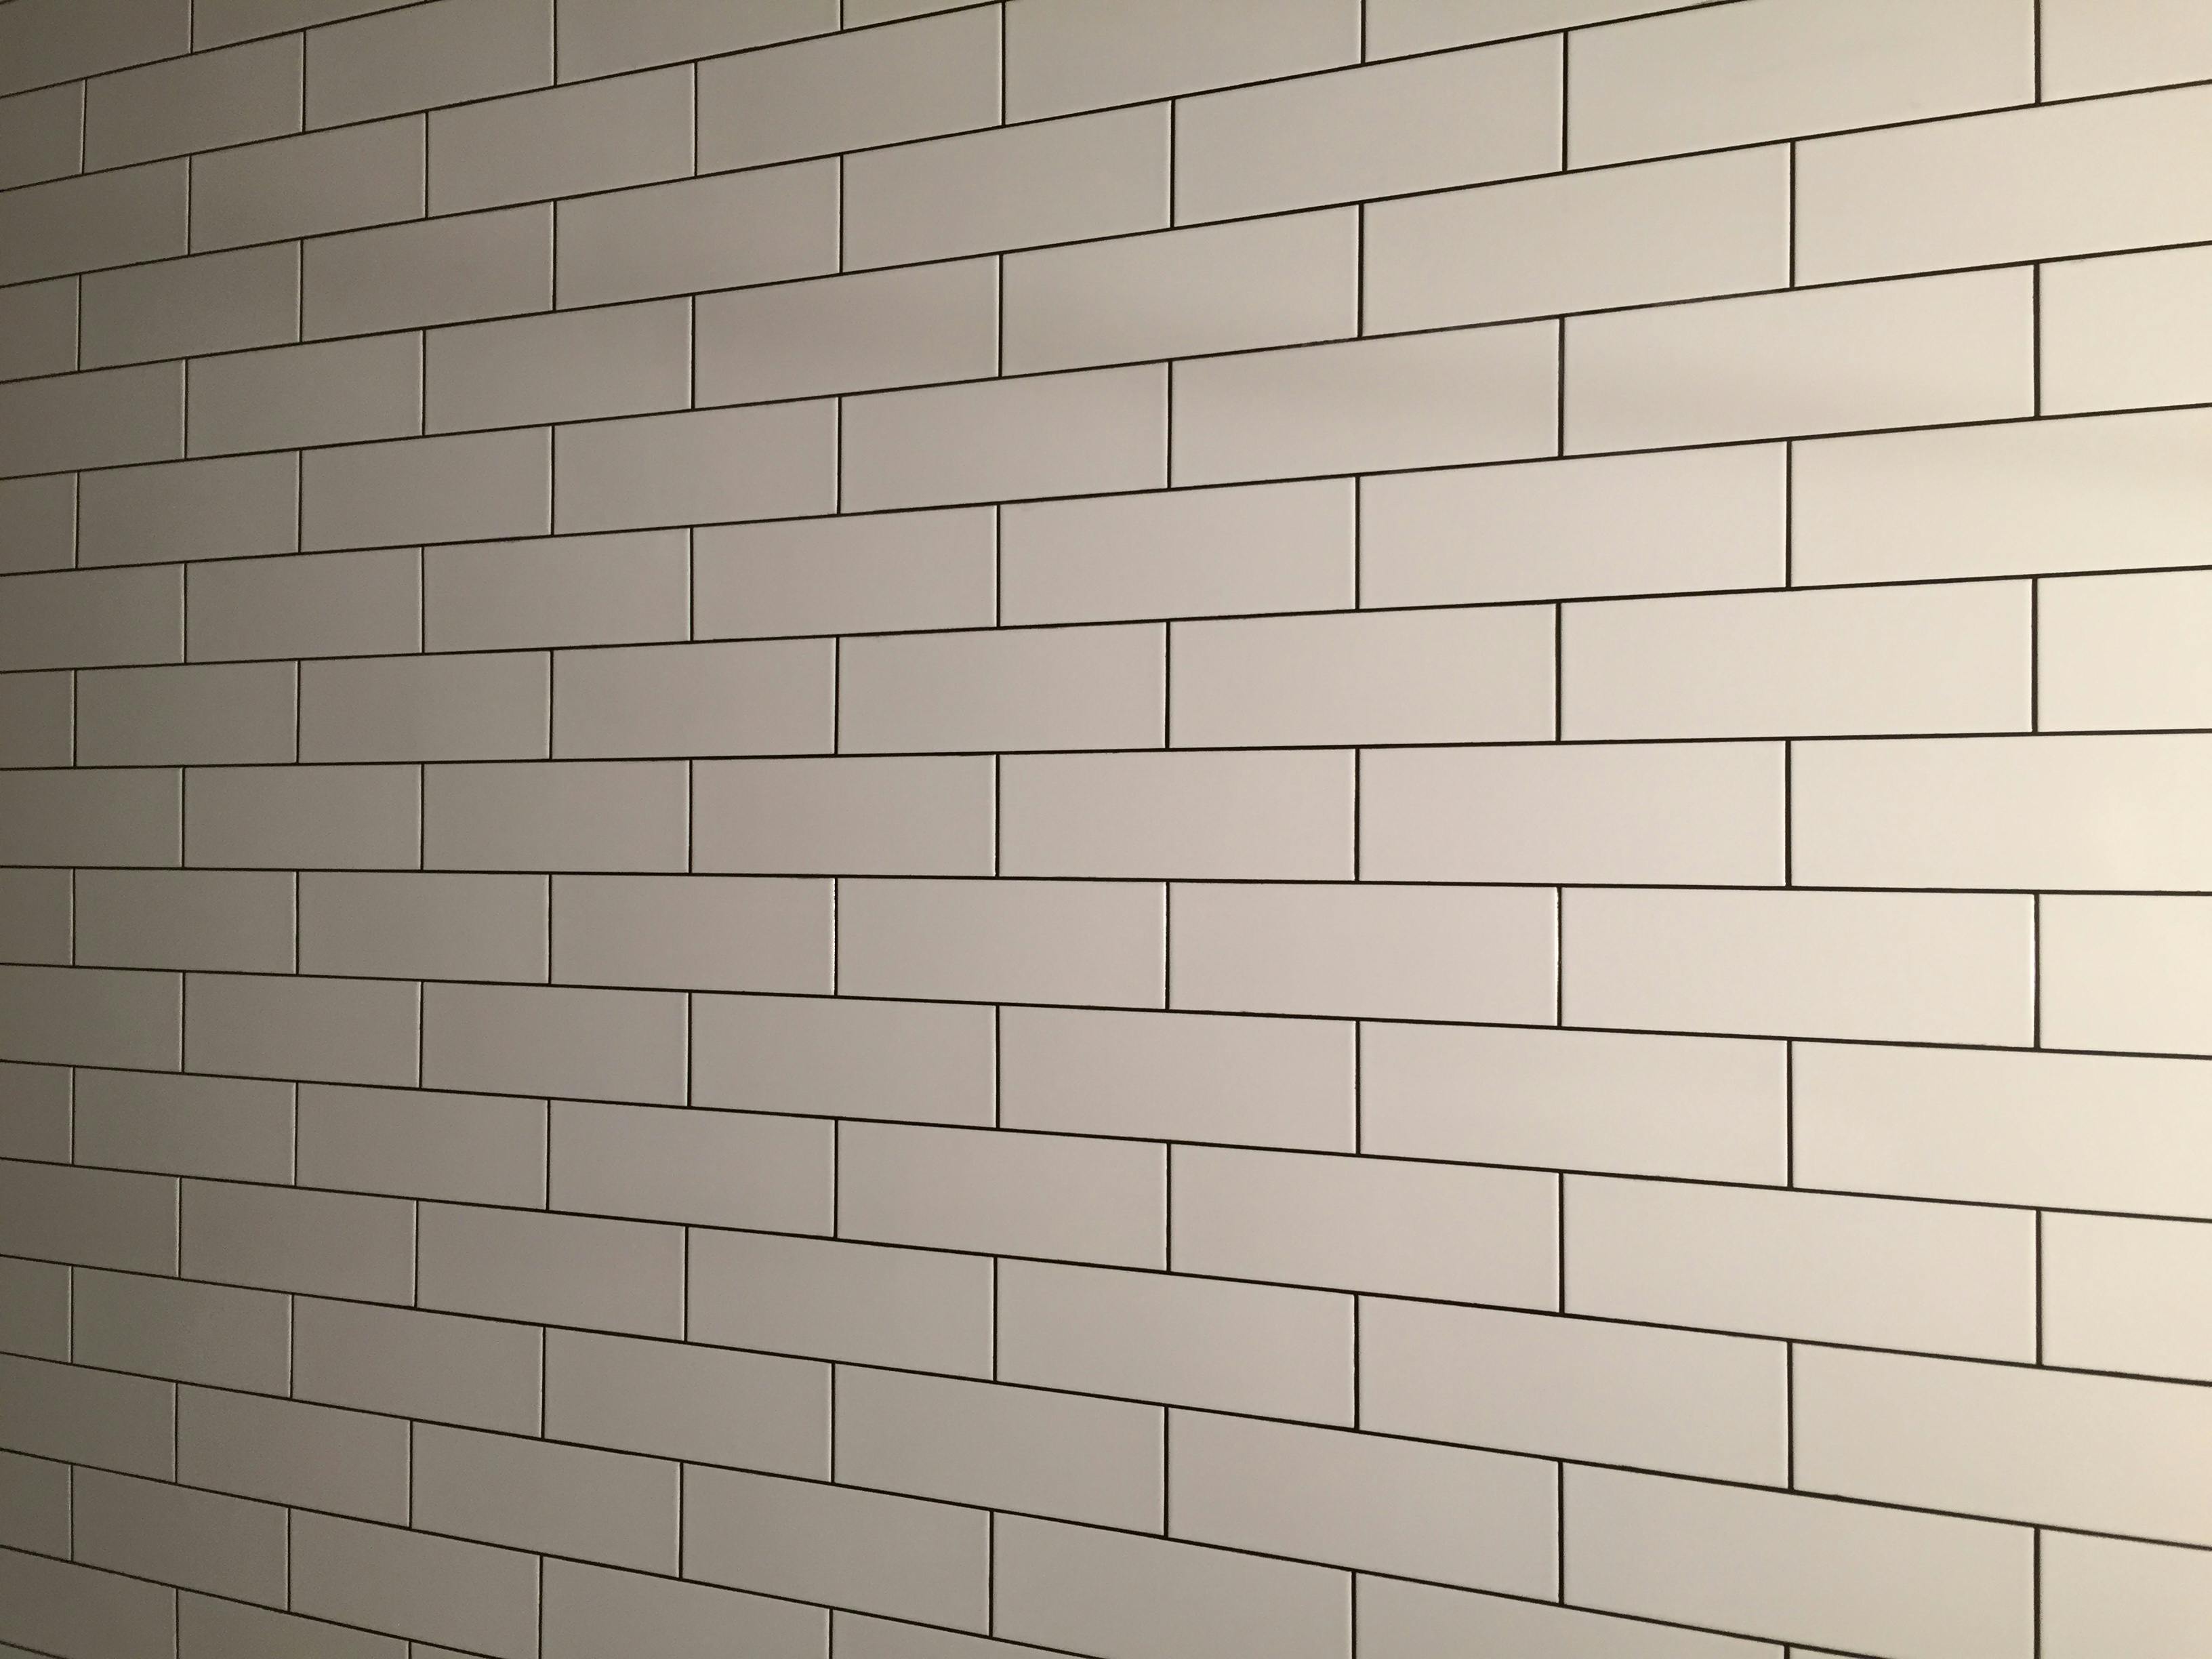 Free stock photo of subway tiles